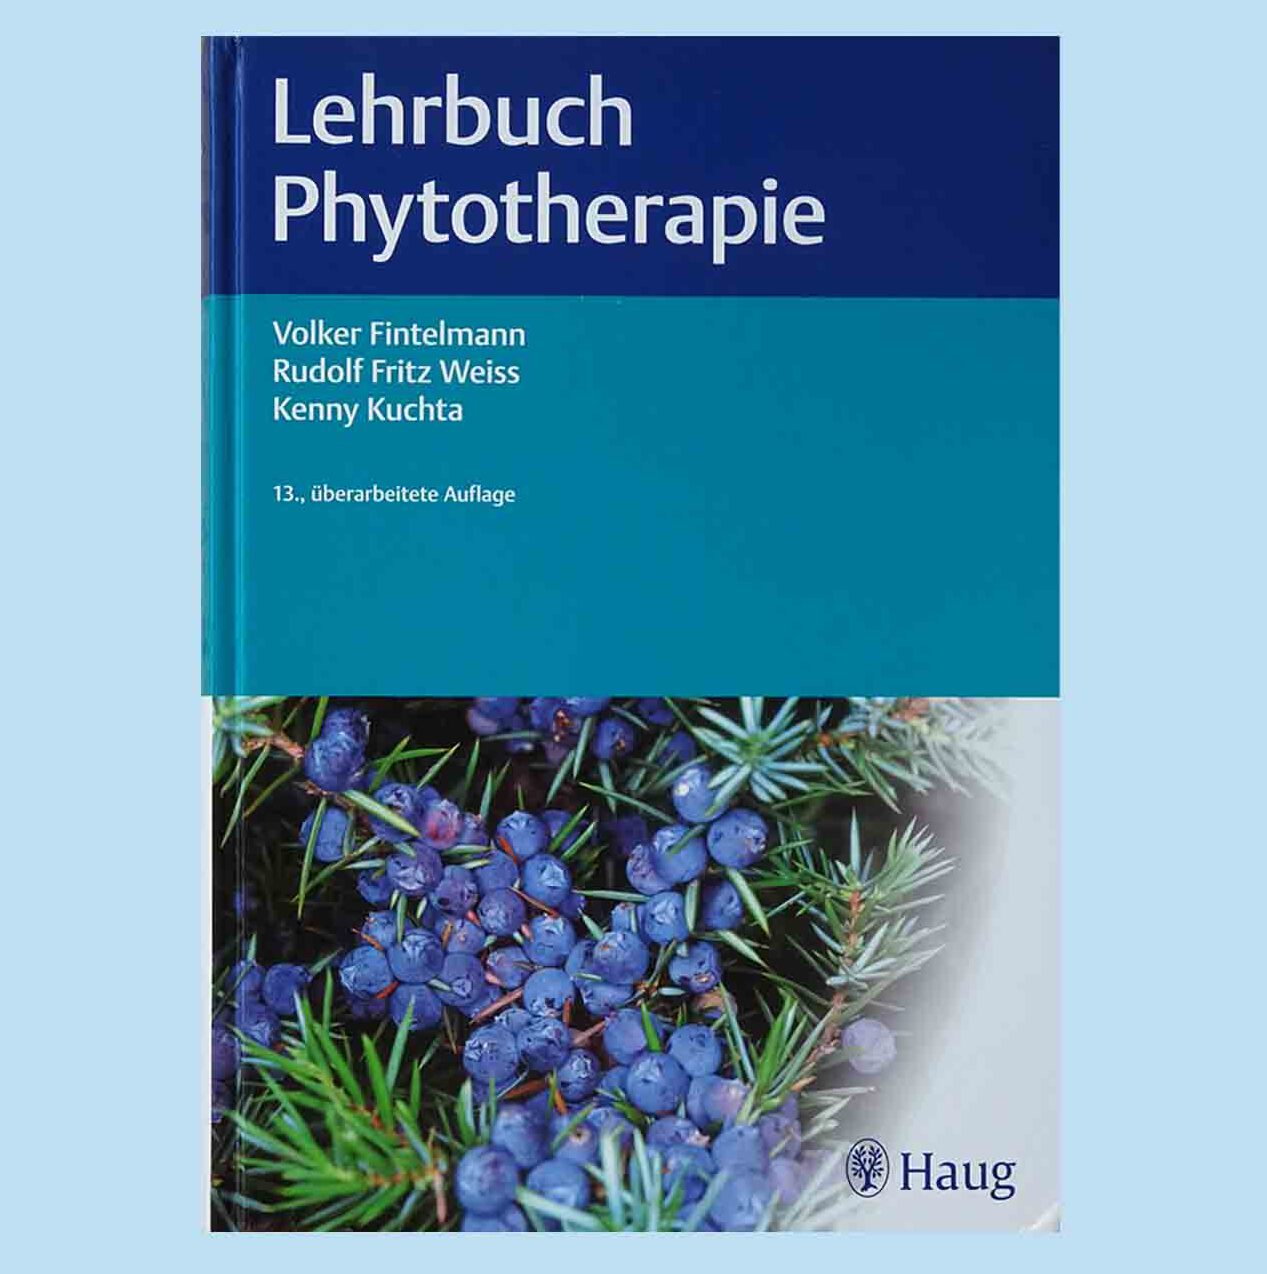 Lehrbuch Phytorherapie aus dem Haug-Verlag Stuttgart.